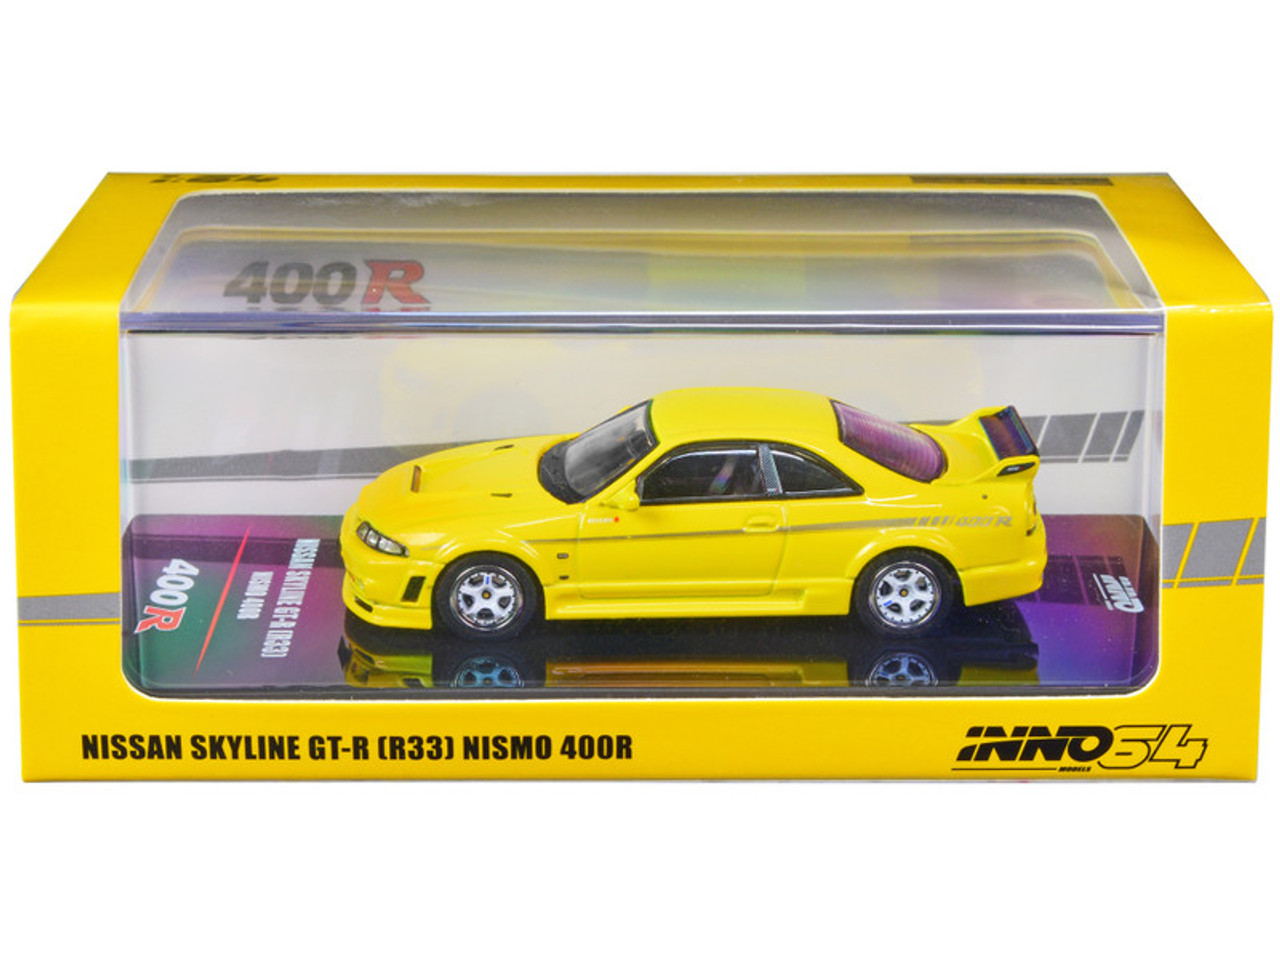 Nissan Skyline GT-R (R33) Nismo 400R RHD (Right Hand Drive) Lightning  Yellow with Silver Stripes 1/64 Diecast Model Car by Inno Models